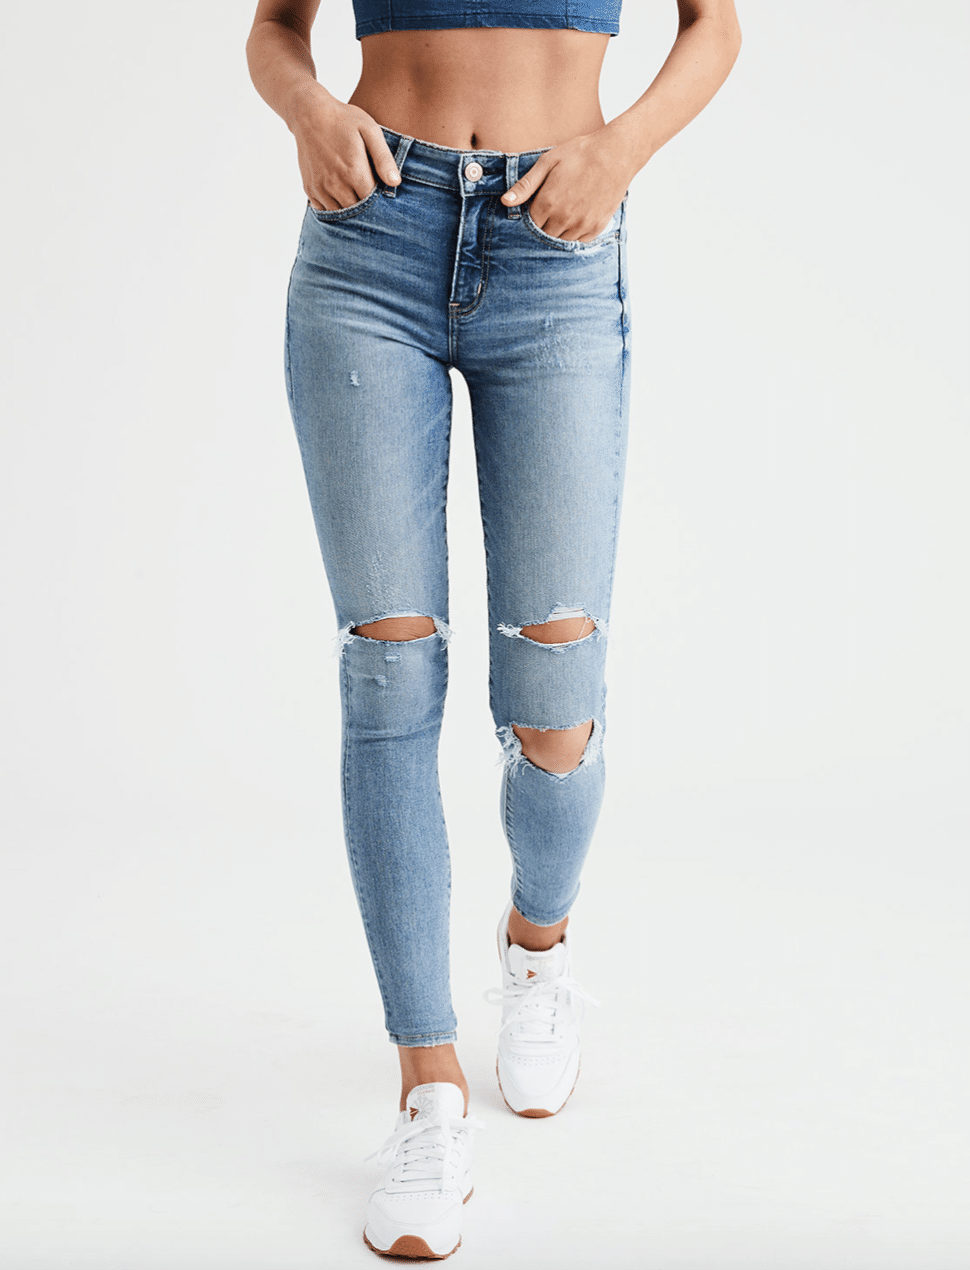 Pacsun Bullhead Jeans Size Chart